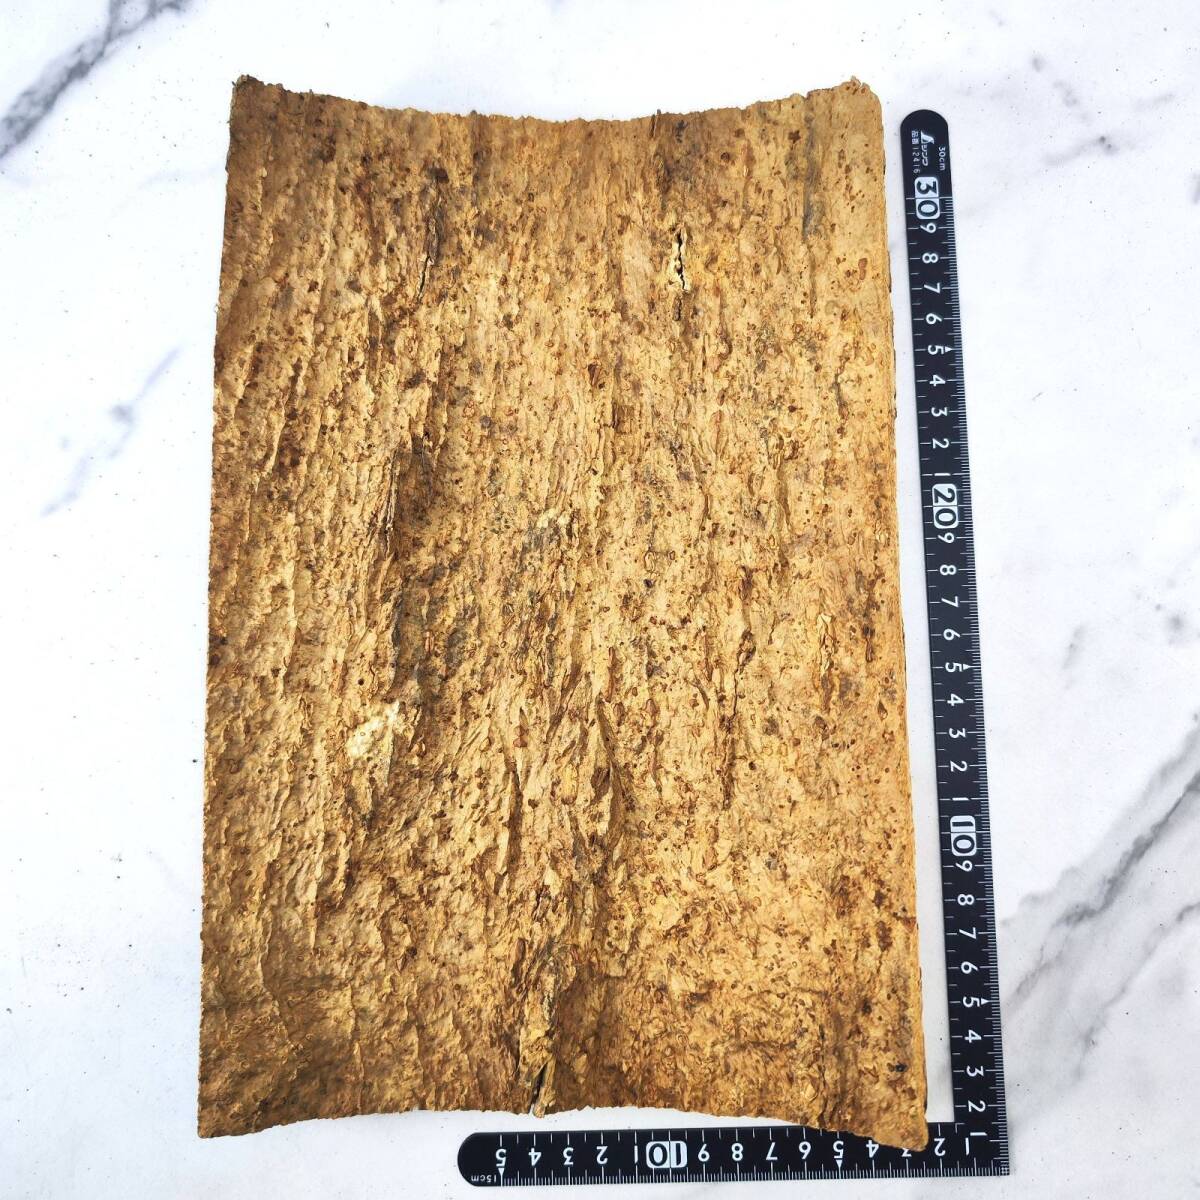 c1026[20×30cm] cork . leather cork board bar Gin cork drilling / free shipping chi Ran jia staghorn fern put on raw Ran amphibia reptiles staghorn fern 